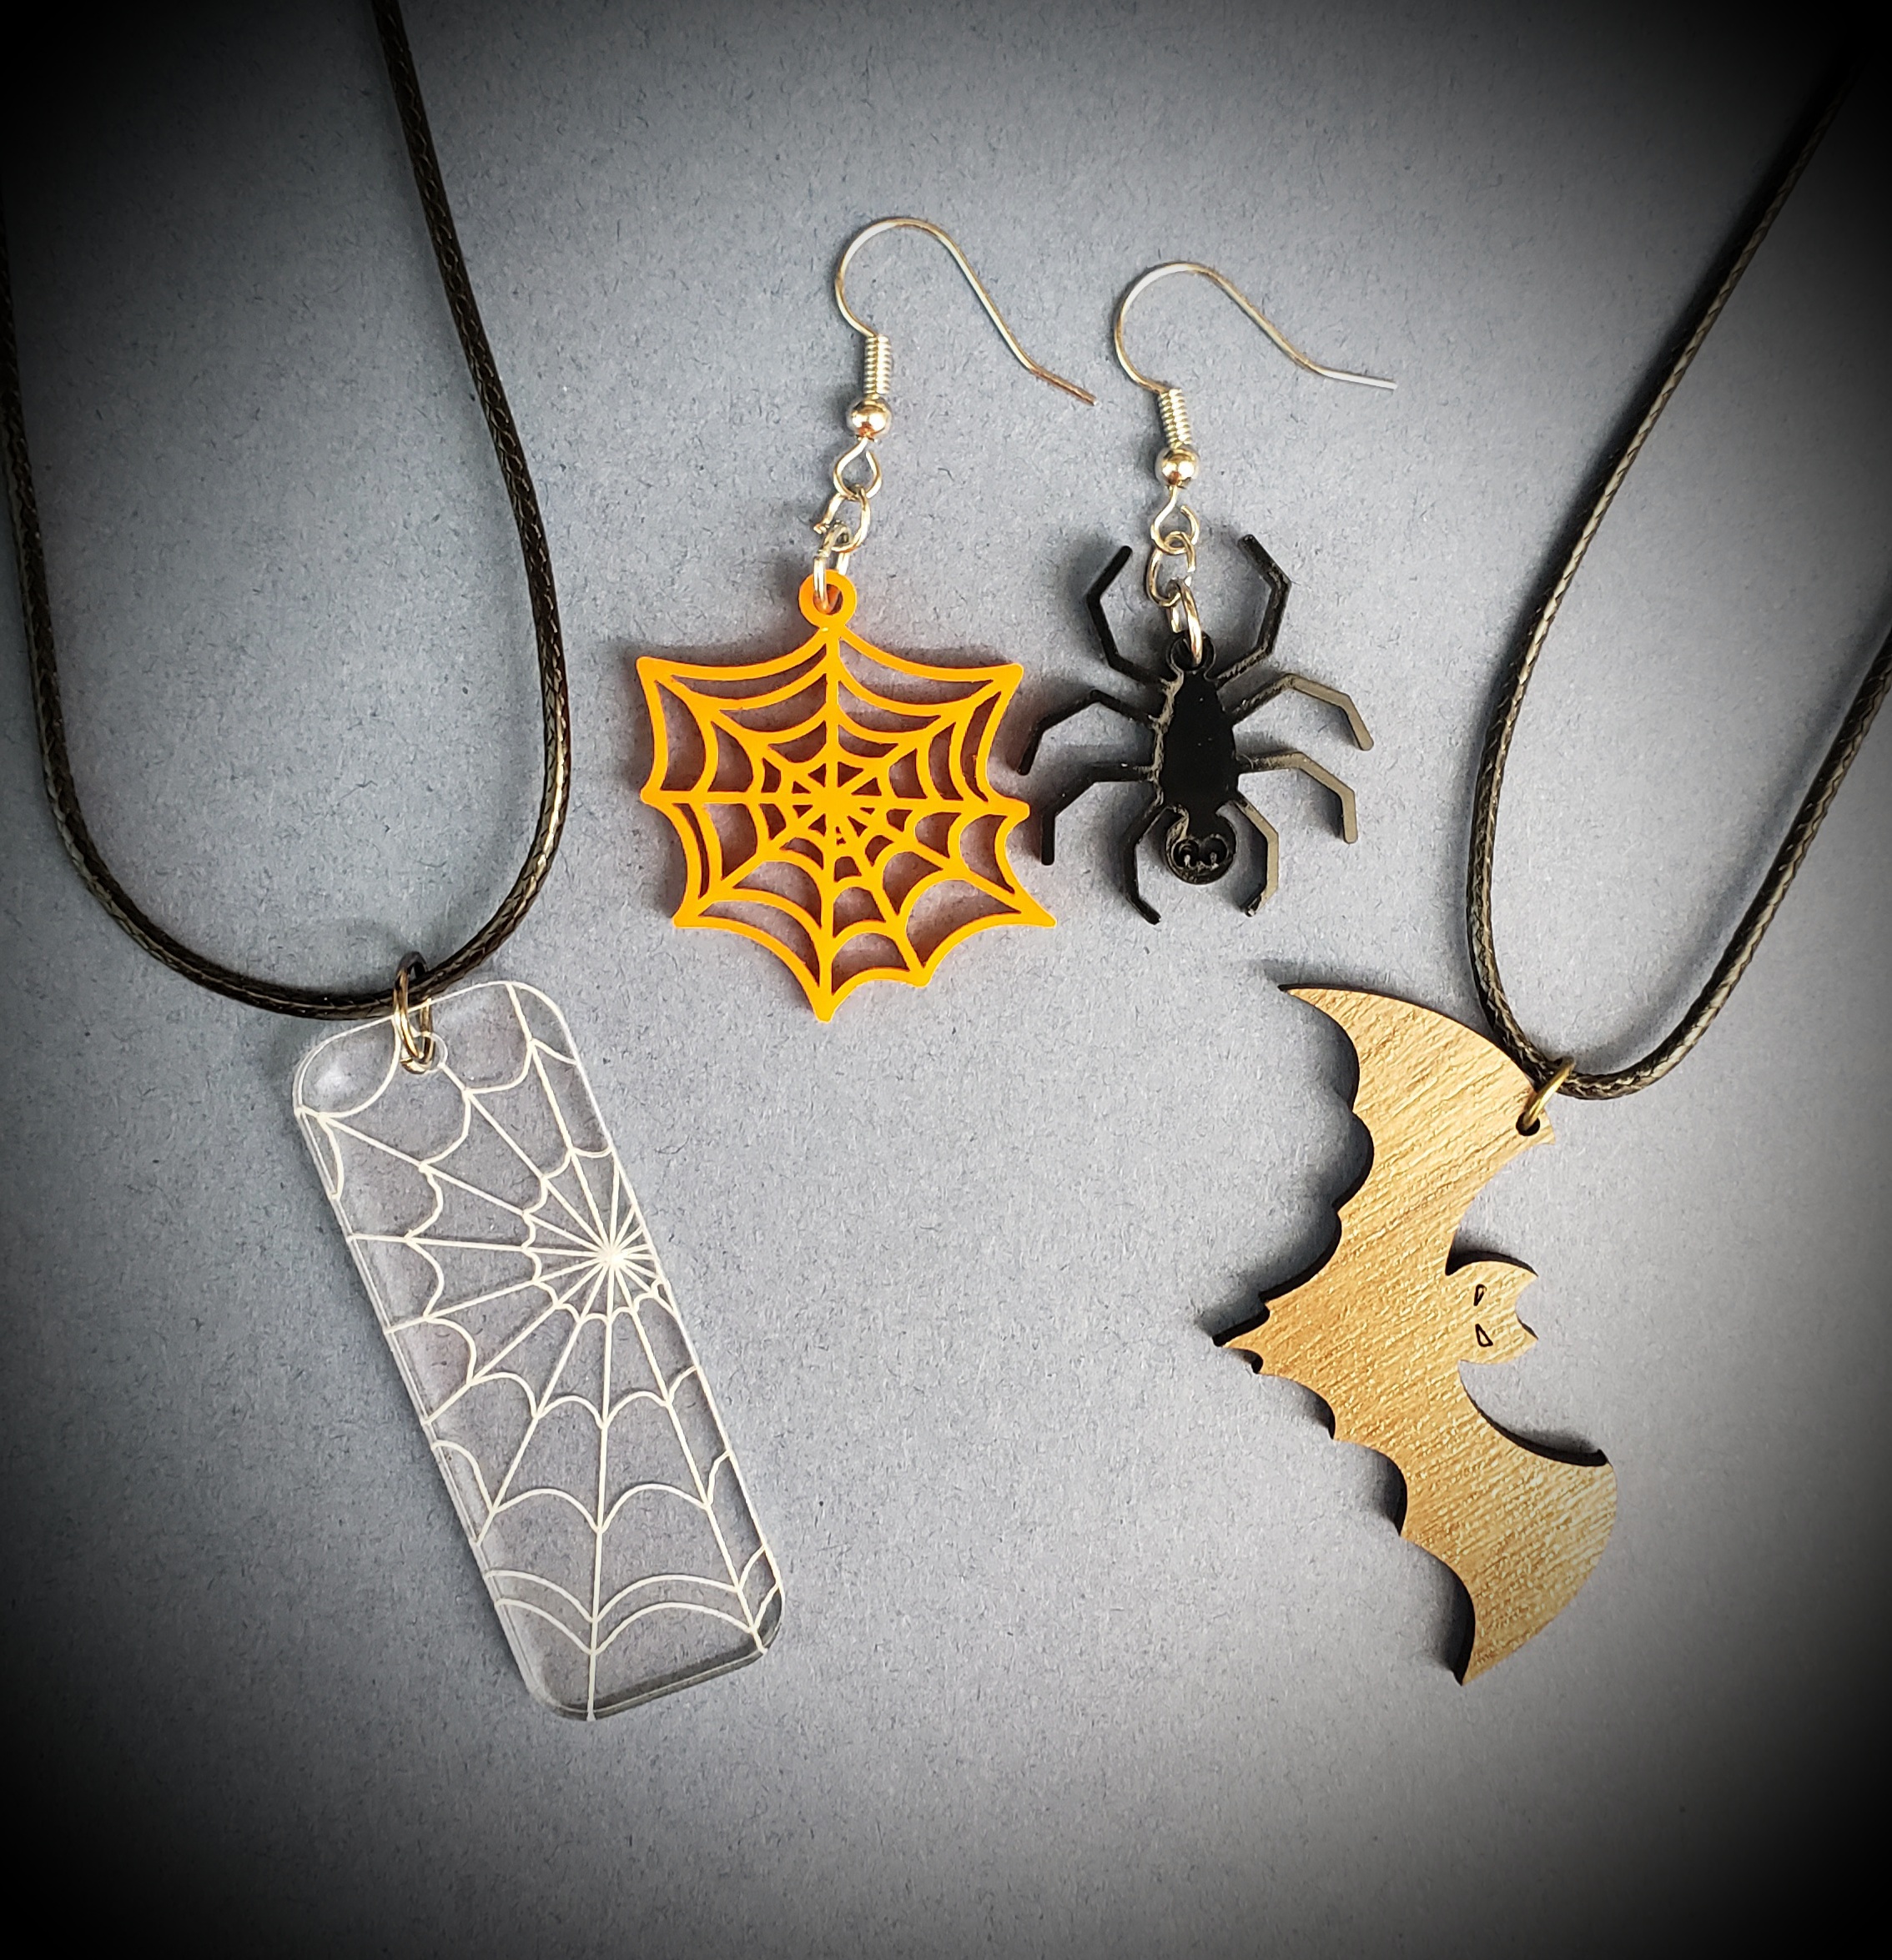 Spiderweb, bat, and spider jewelry pieces shown against blue background